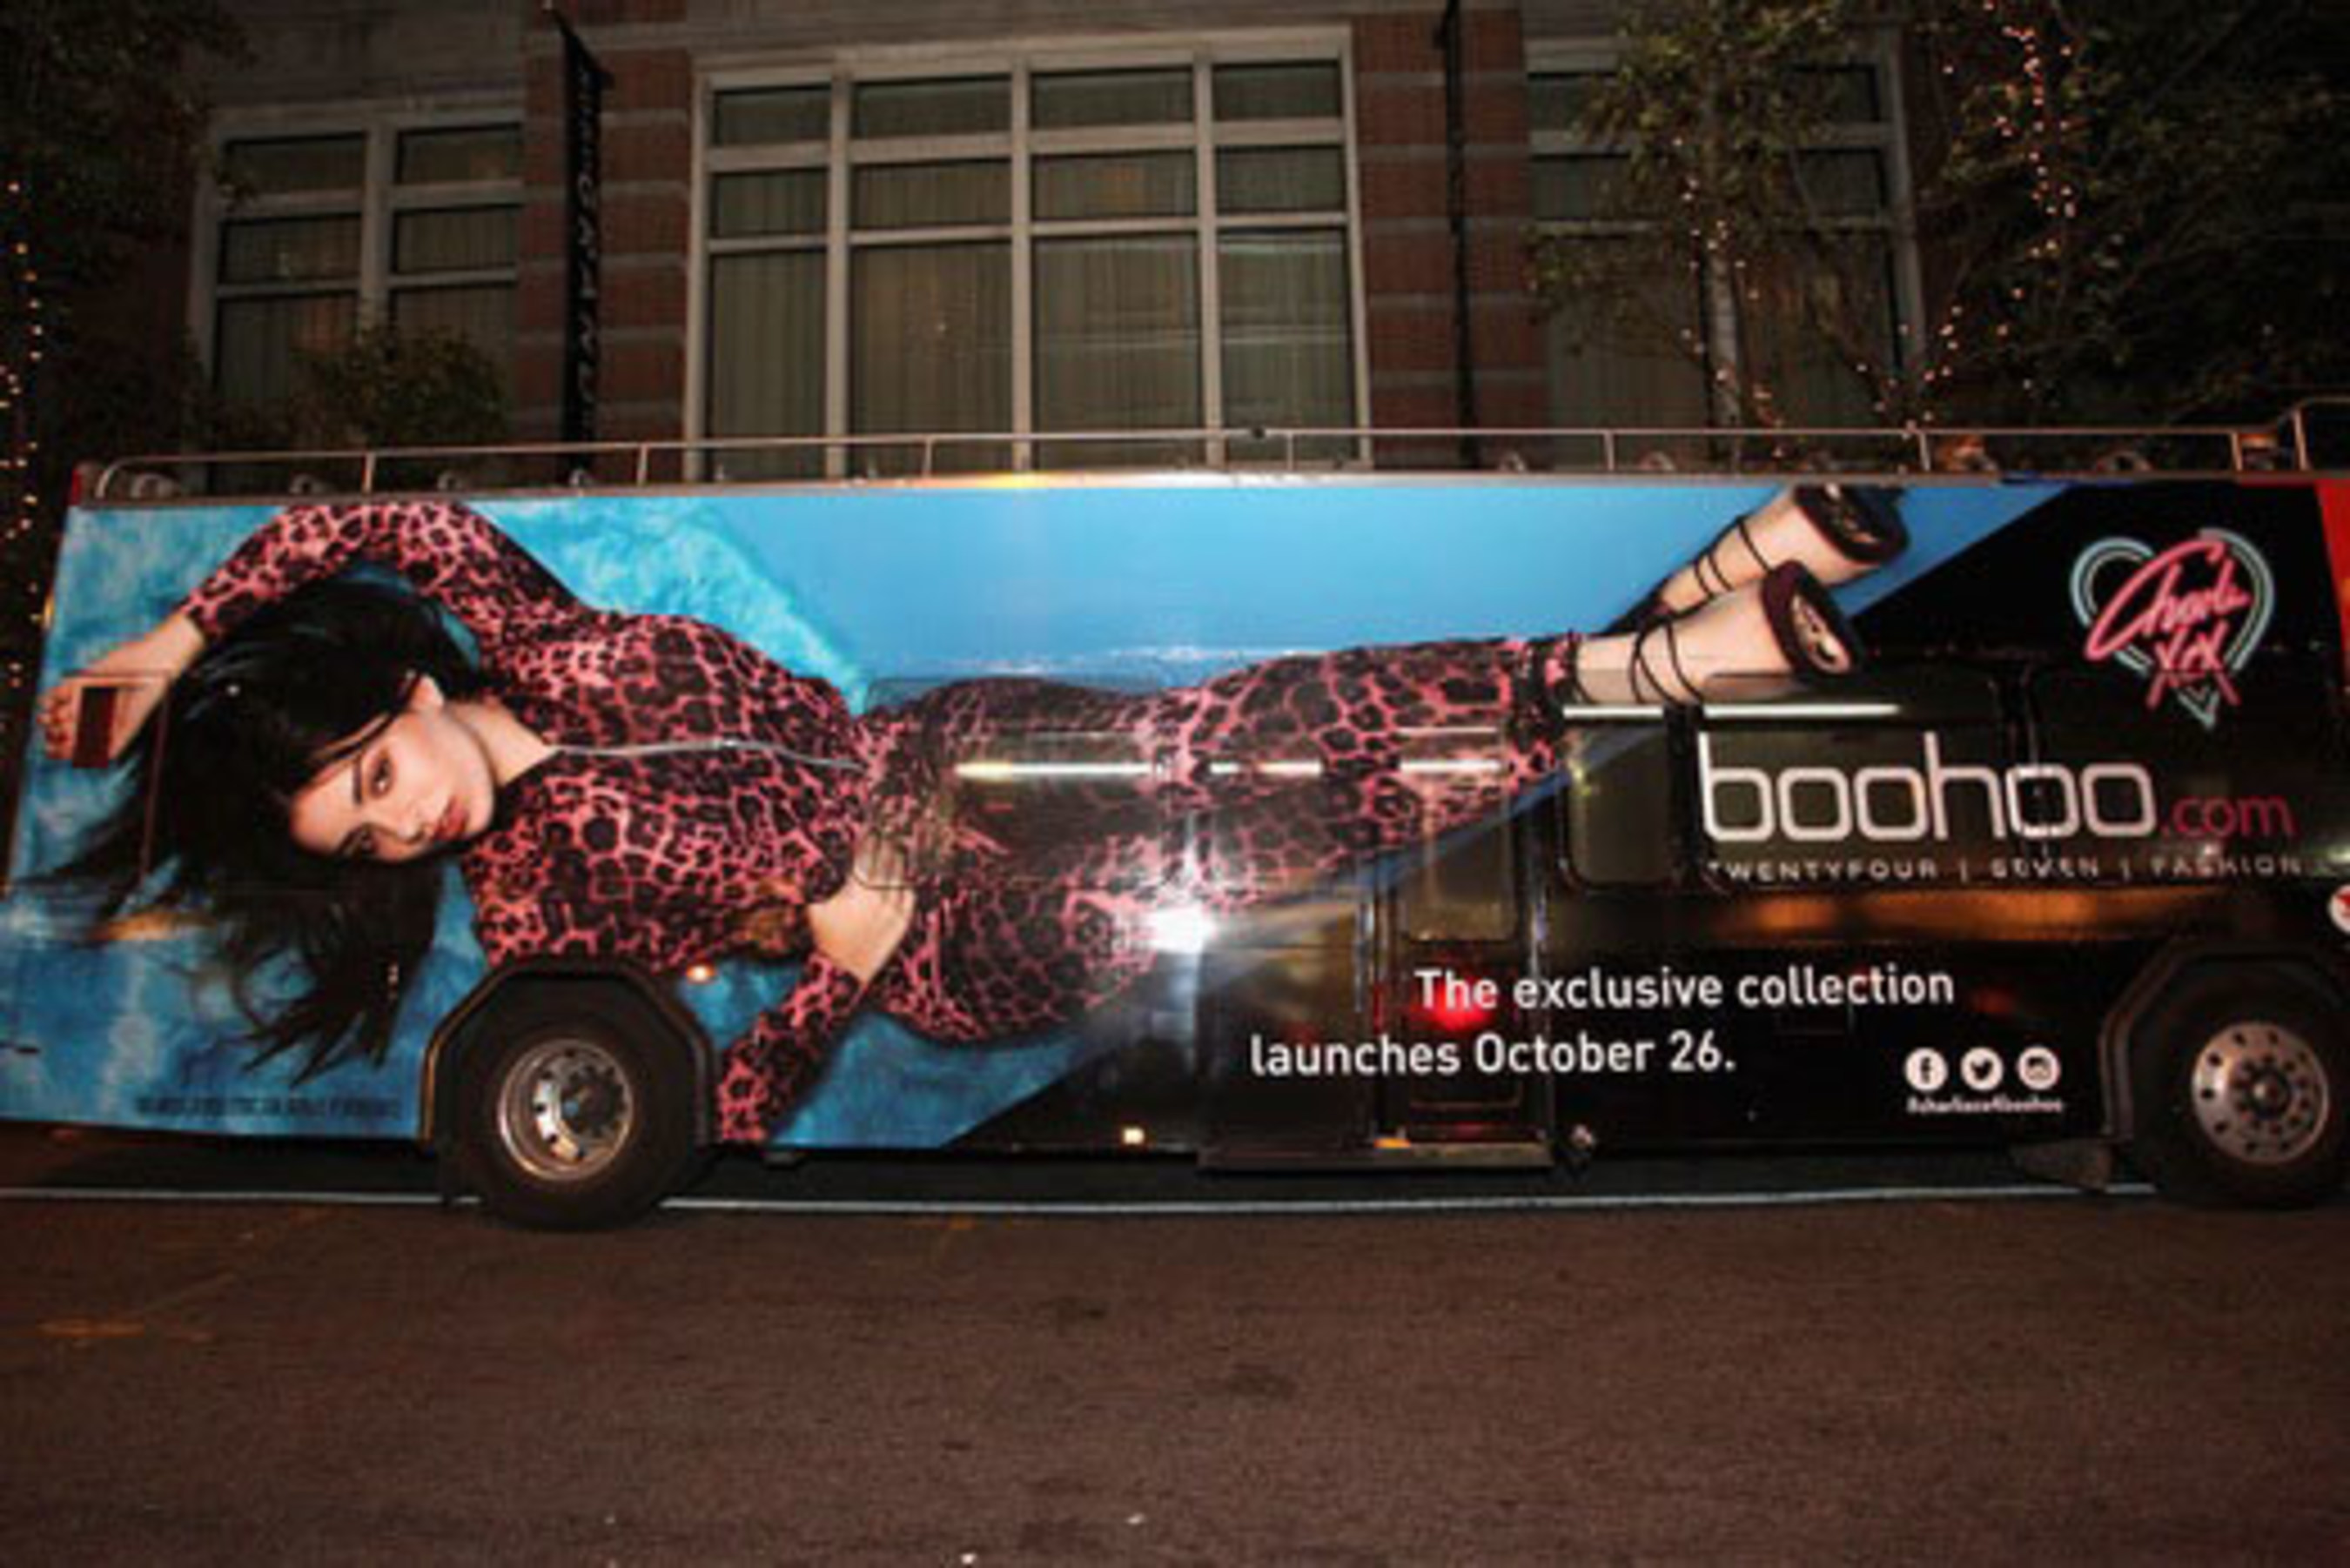 Charli's branded Boohoo bus